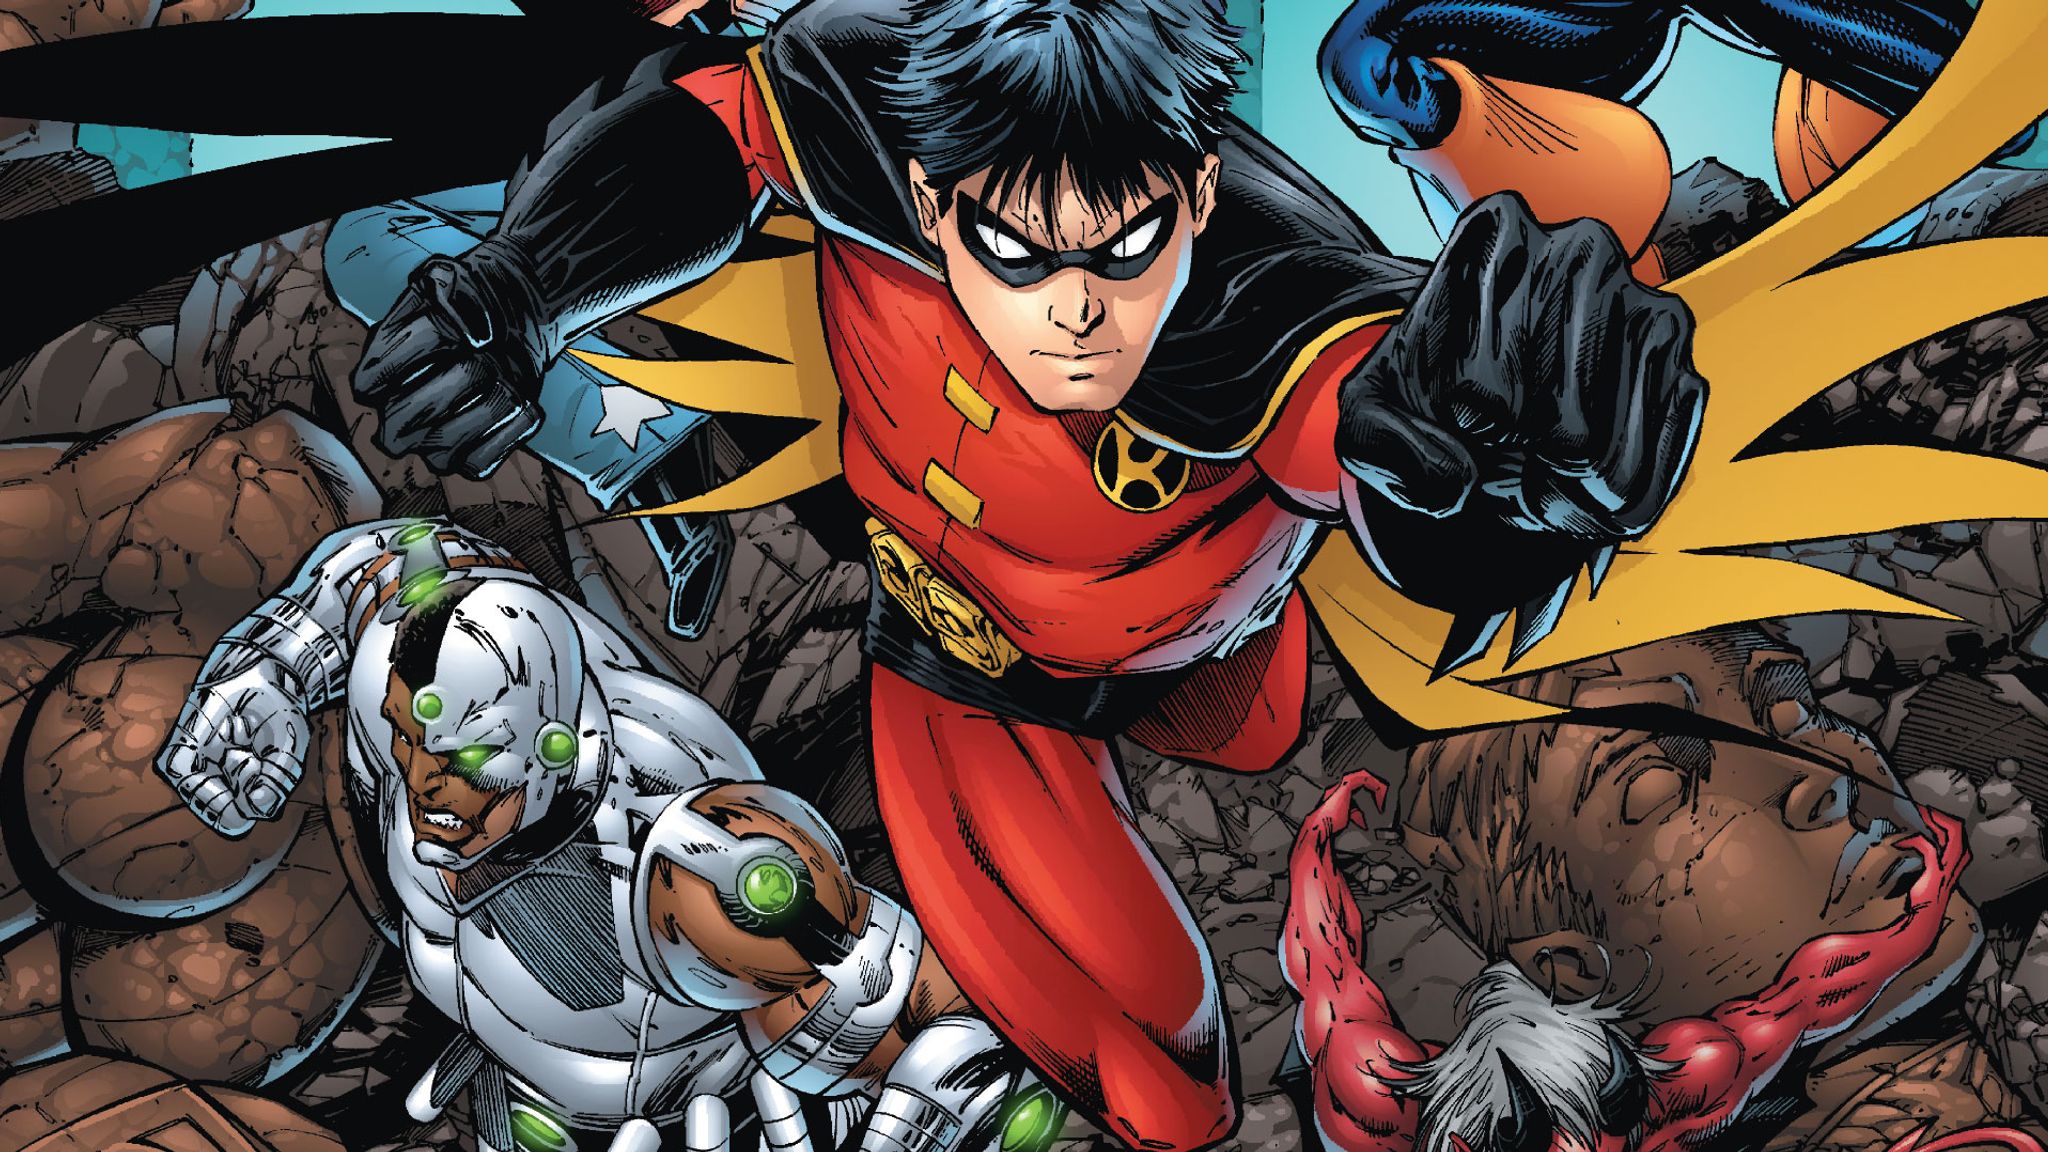 Tim Drake: Batman sidekick Robin comes out as bisexual in new comic book